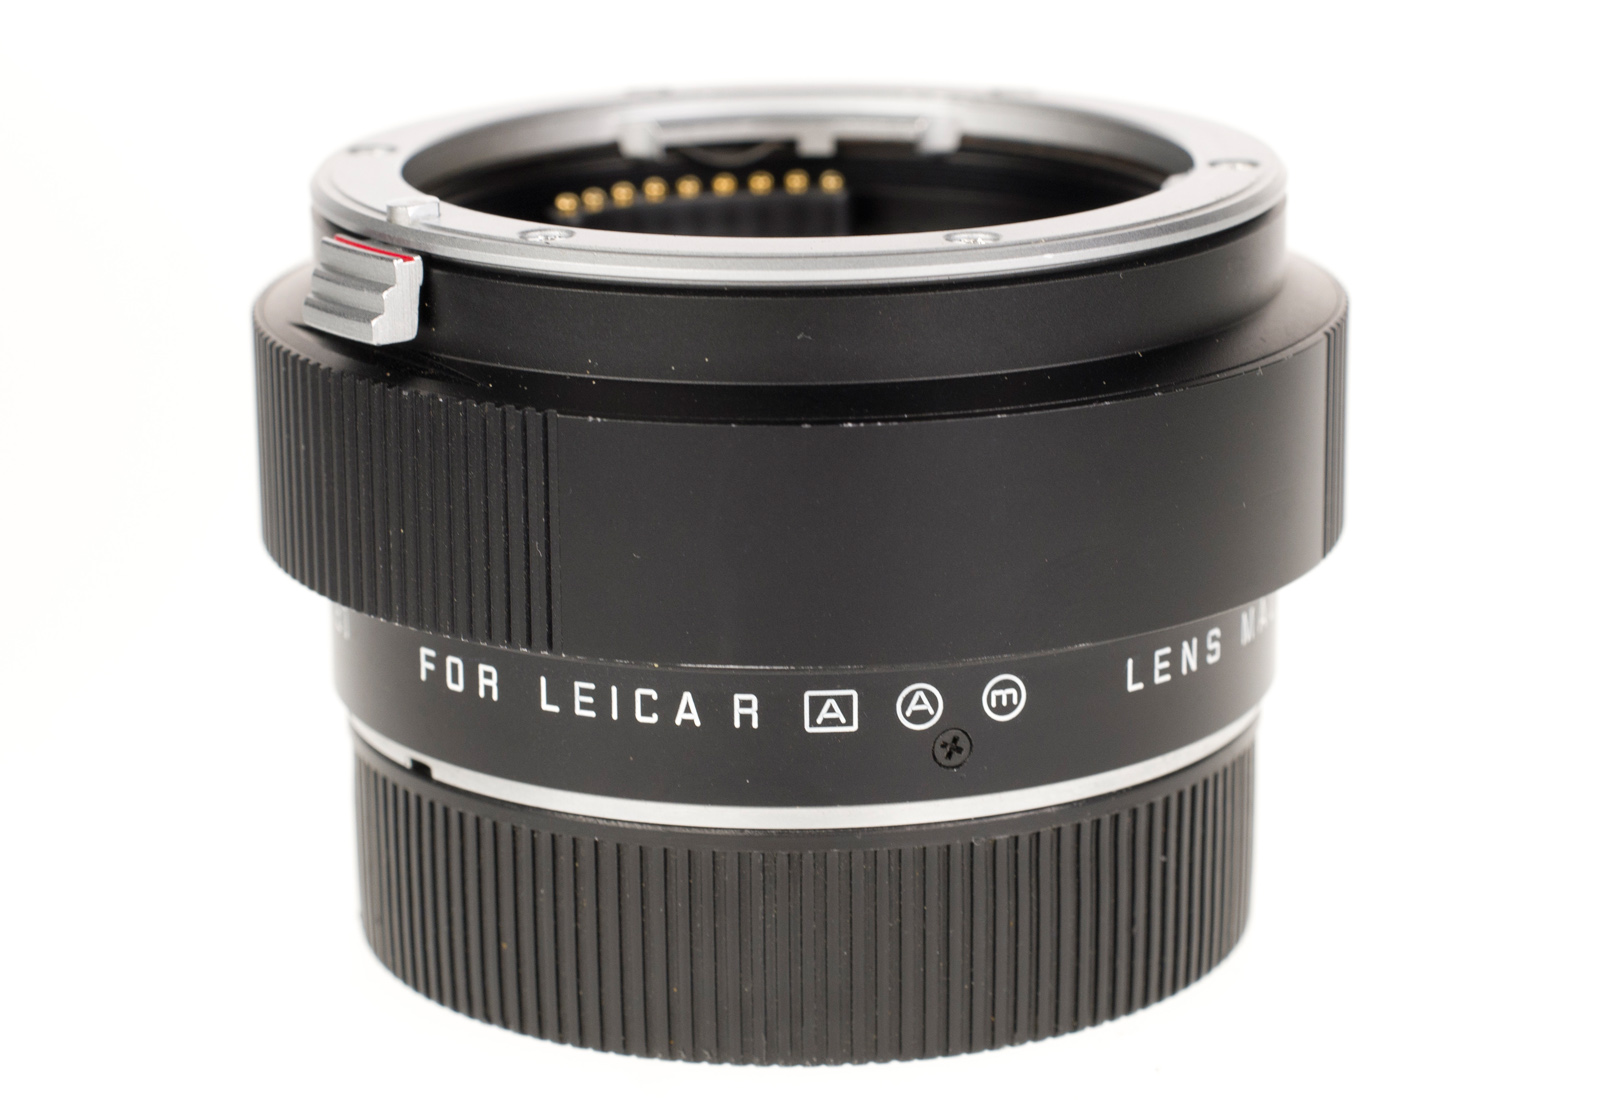 Leica APO-Extender-R 2x, ROM